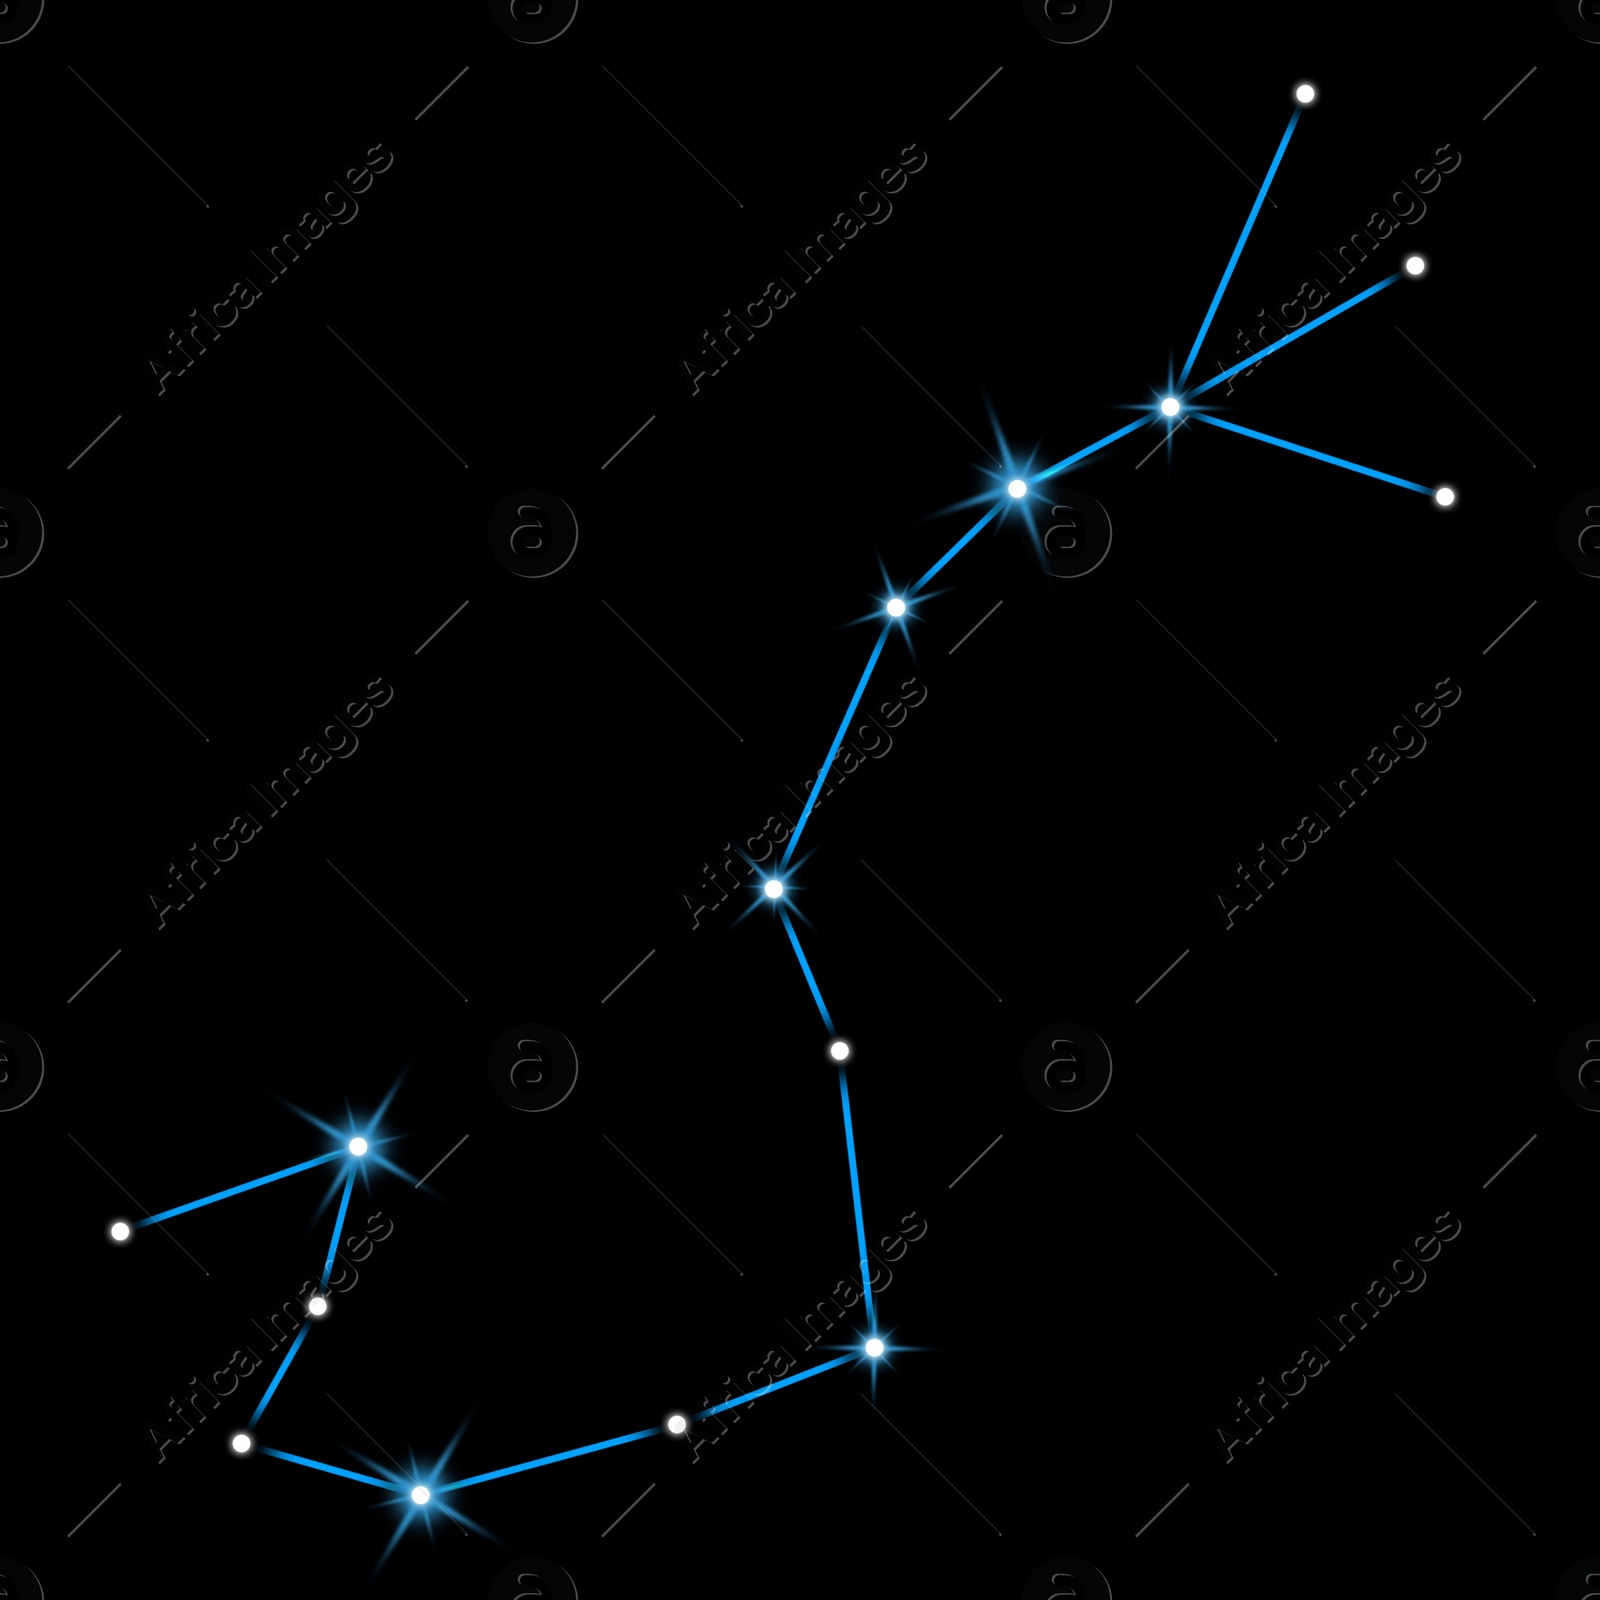 Image of Scorpius (Scorpion) constellation. Stick figure pattern on black background